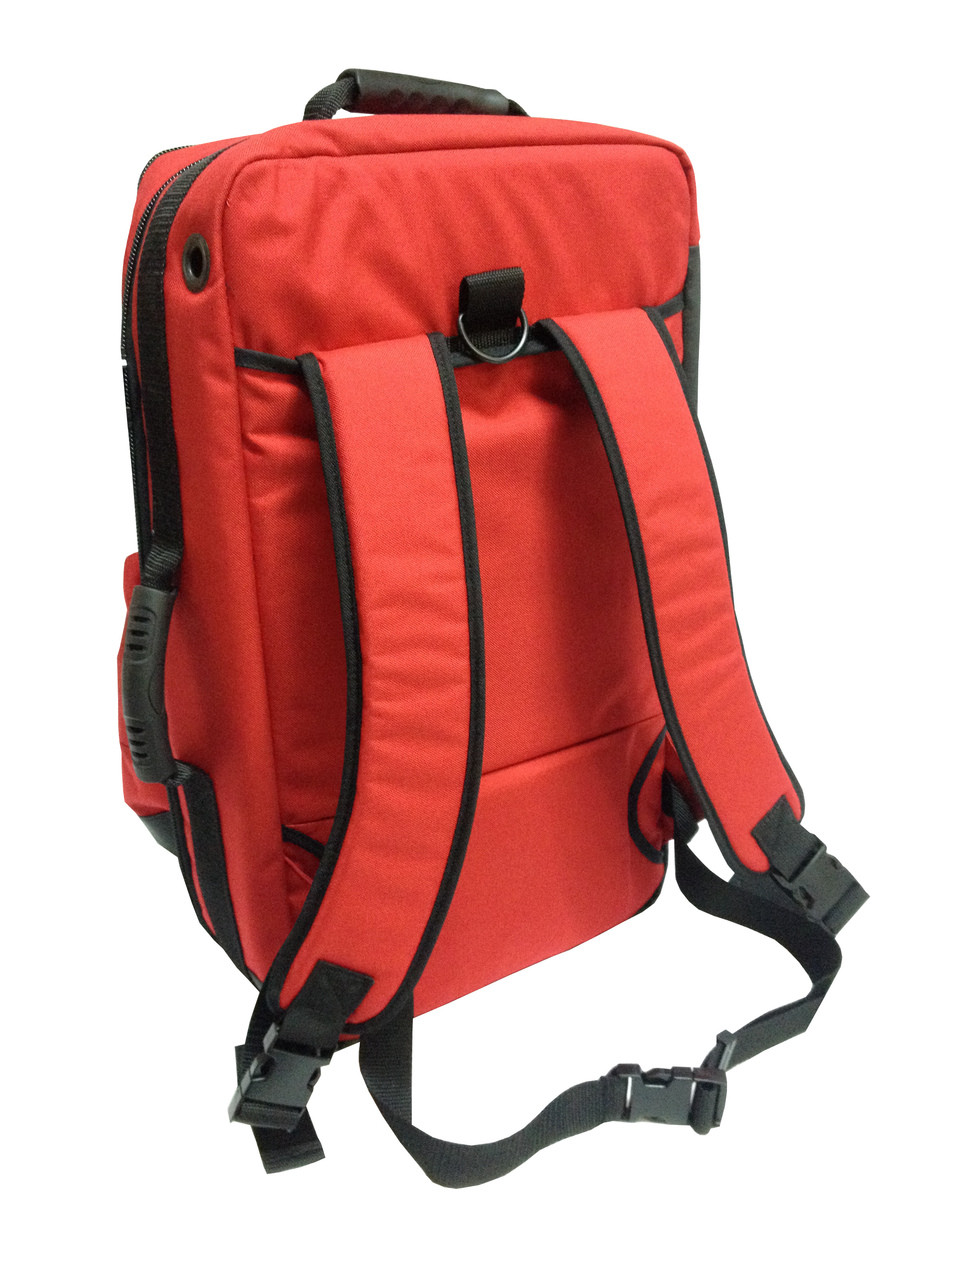 Stocked - O2 / Trauma / AED Backpack